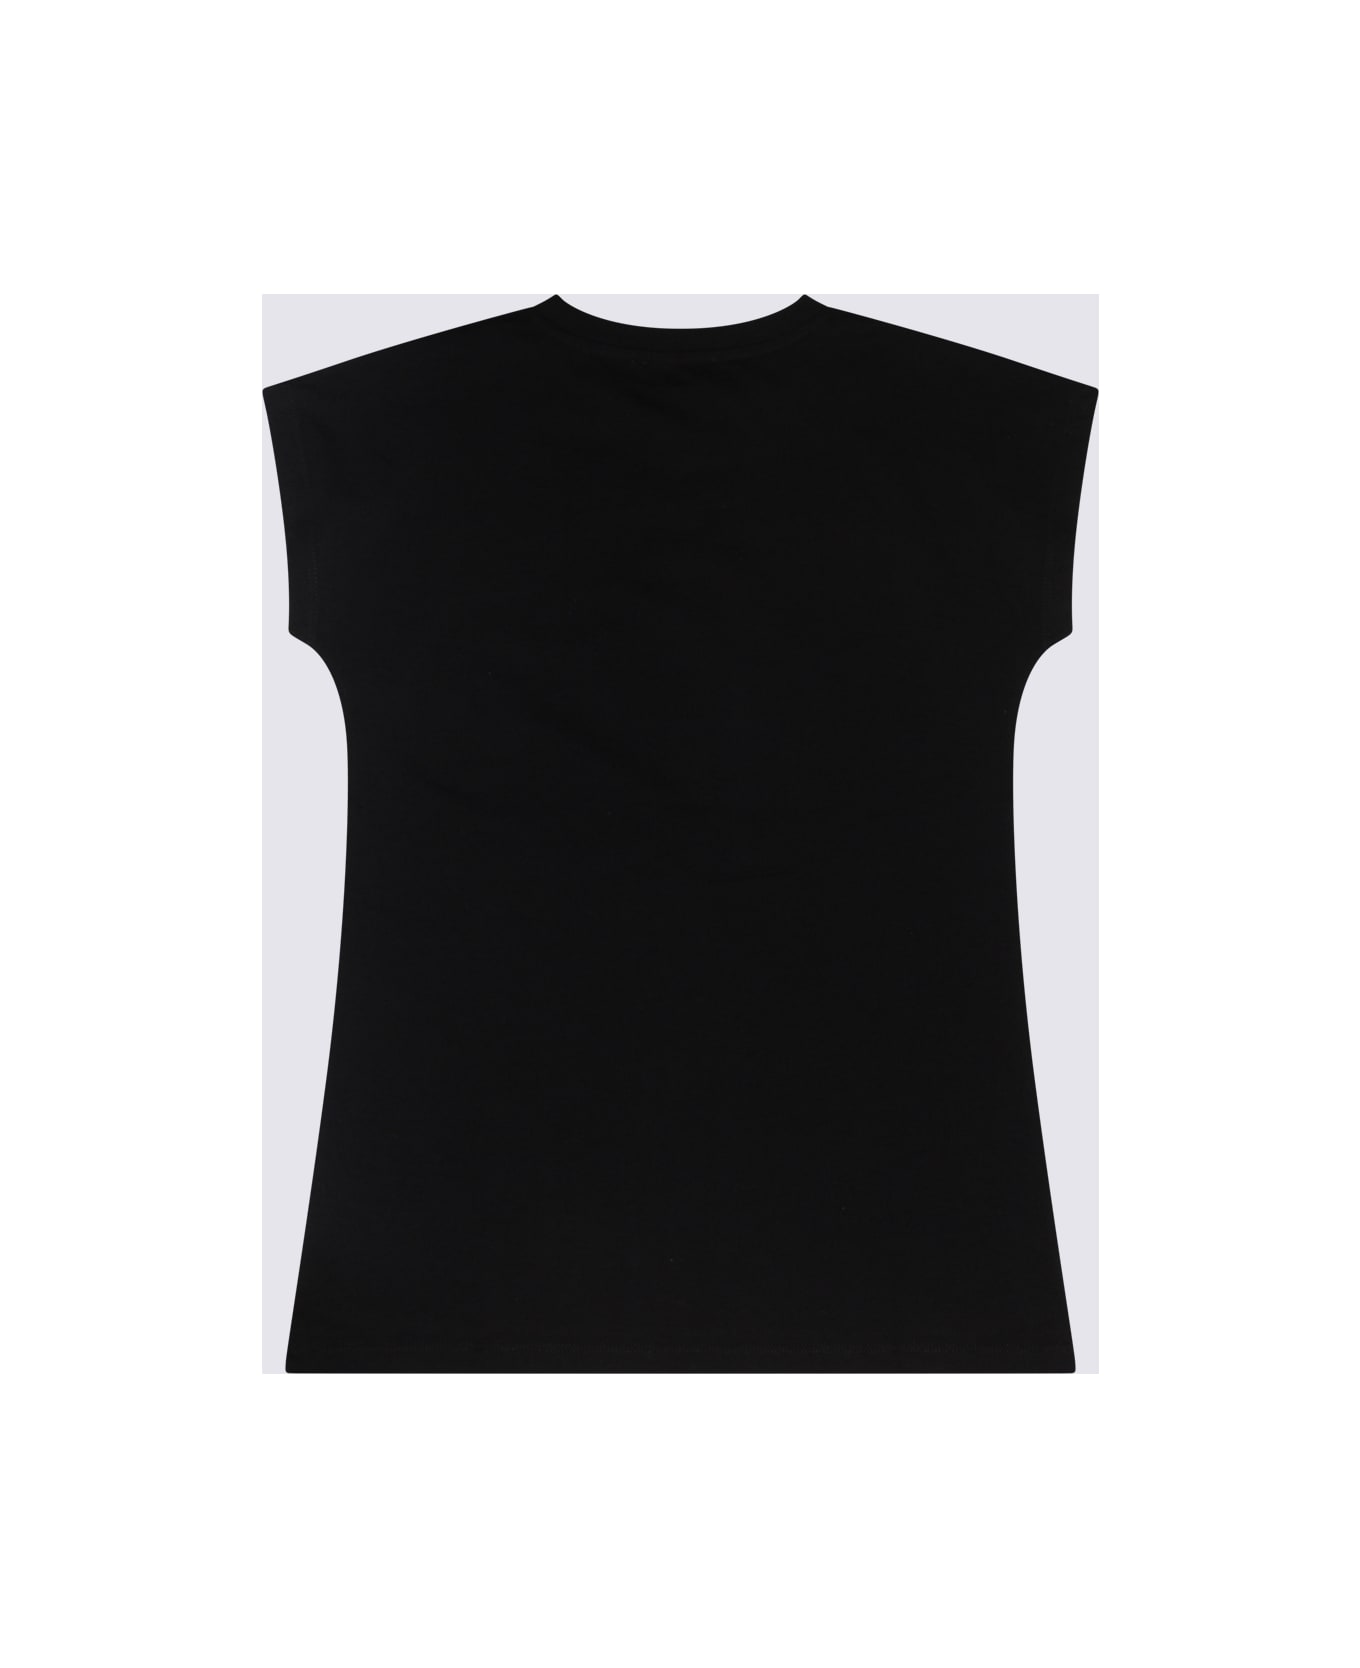 Balmain Black Cotton Dress - Black ジャンプスーツ